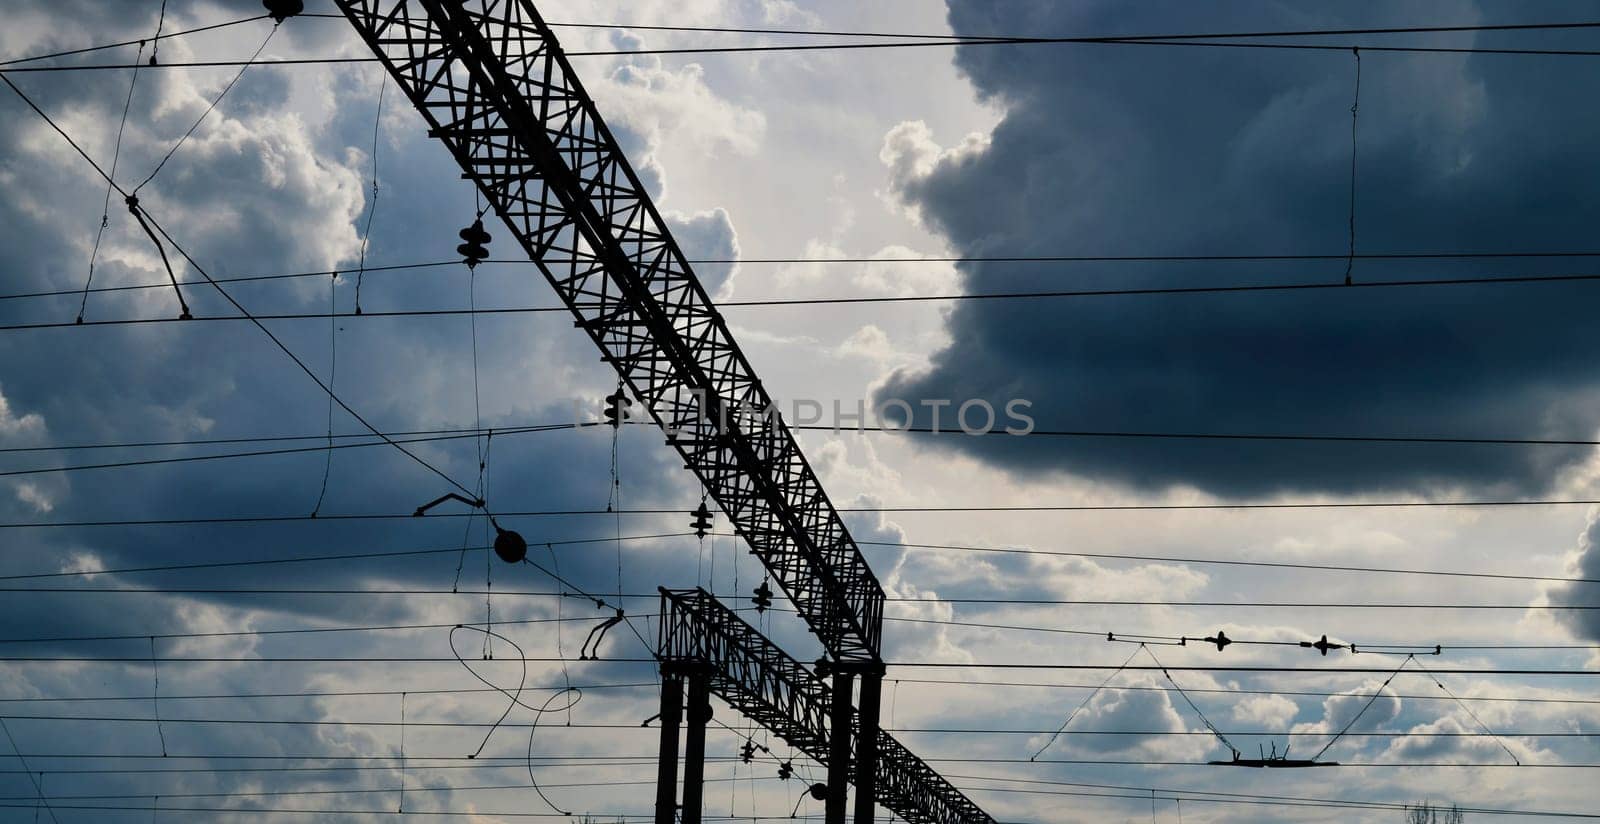 Railway high-voltage line of power supplies by igor010